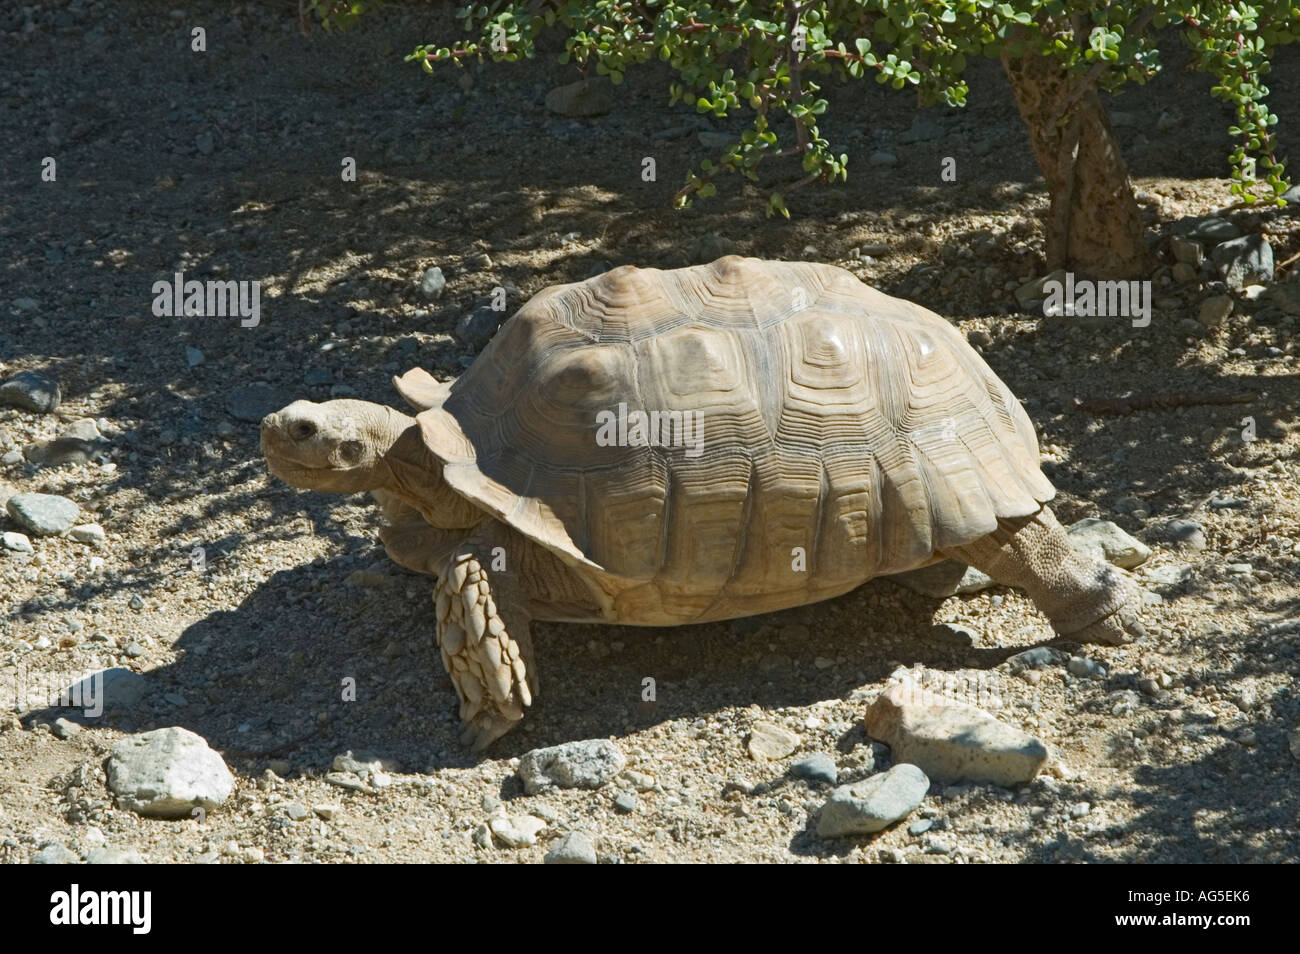 California Palm Desert The Living Desert Zoo and Gardens African Spurred Tortoise Geochelone sulcata Stock Photo